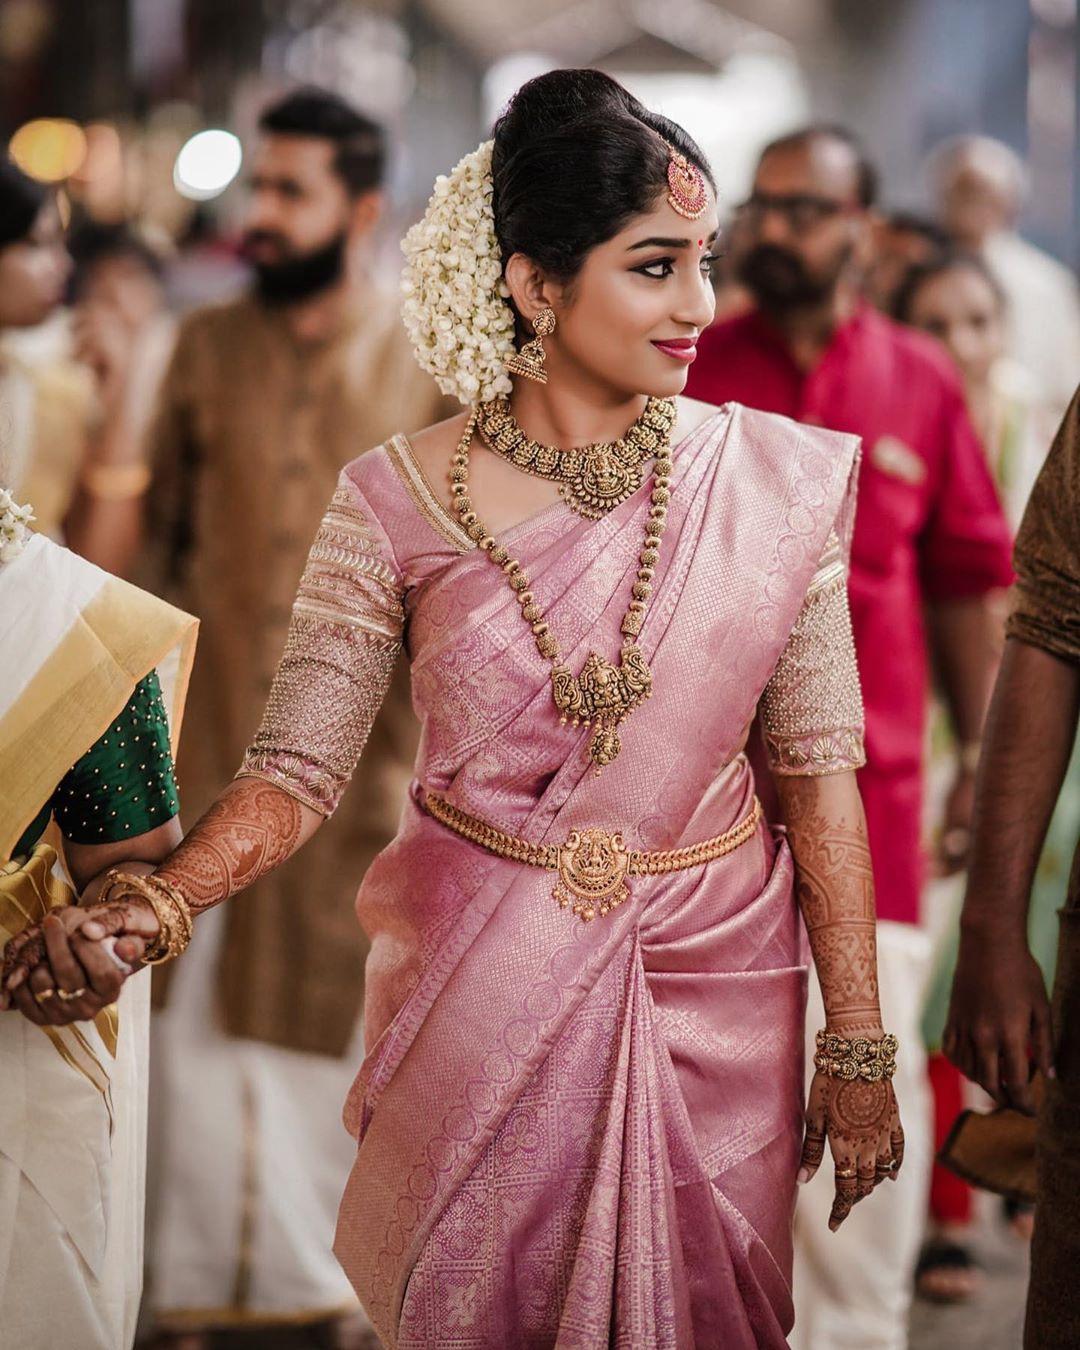 636 Wedding Dress Kerala Images, Stock Photos, 3D objects, & Vectors |  Shutterstock